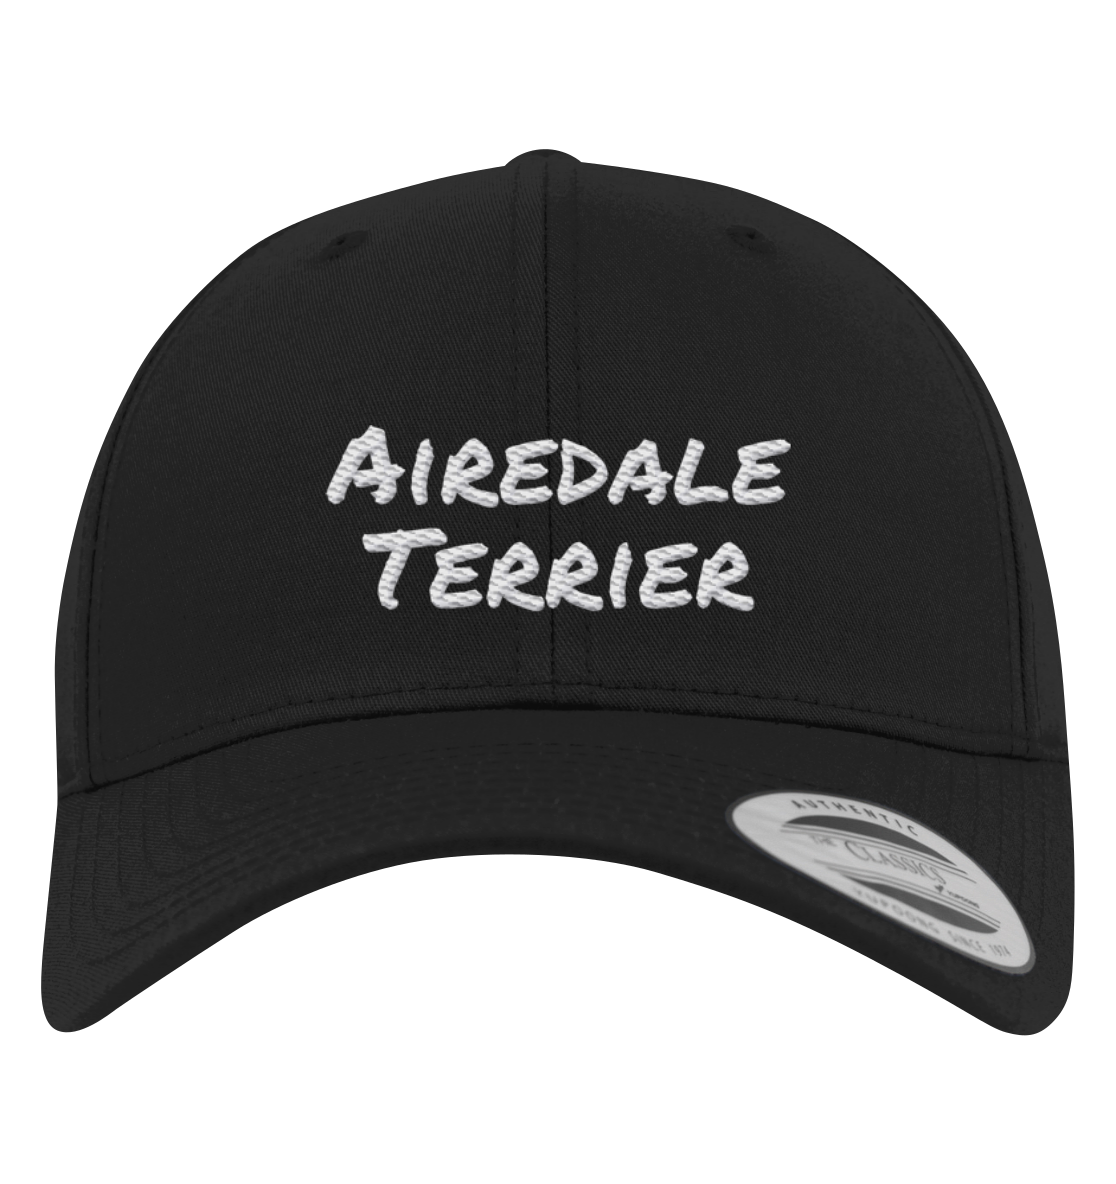 Airedale Terrier - Premium Baseball Cap